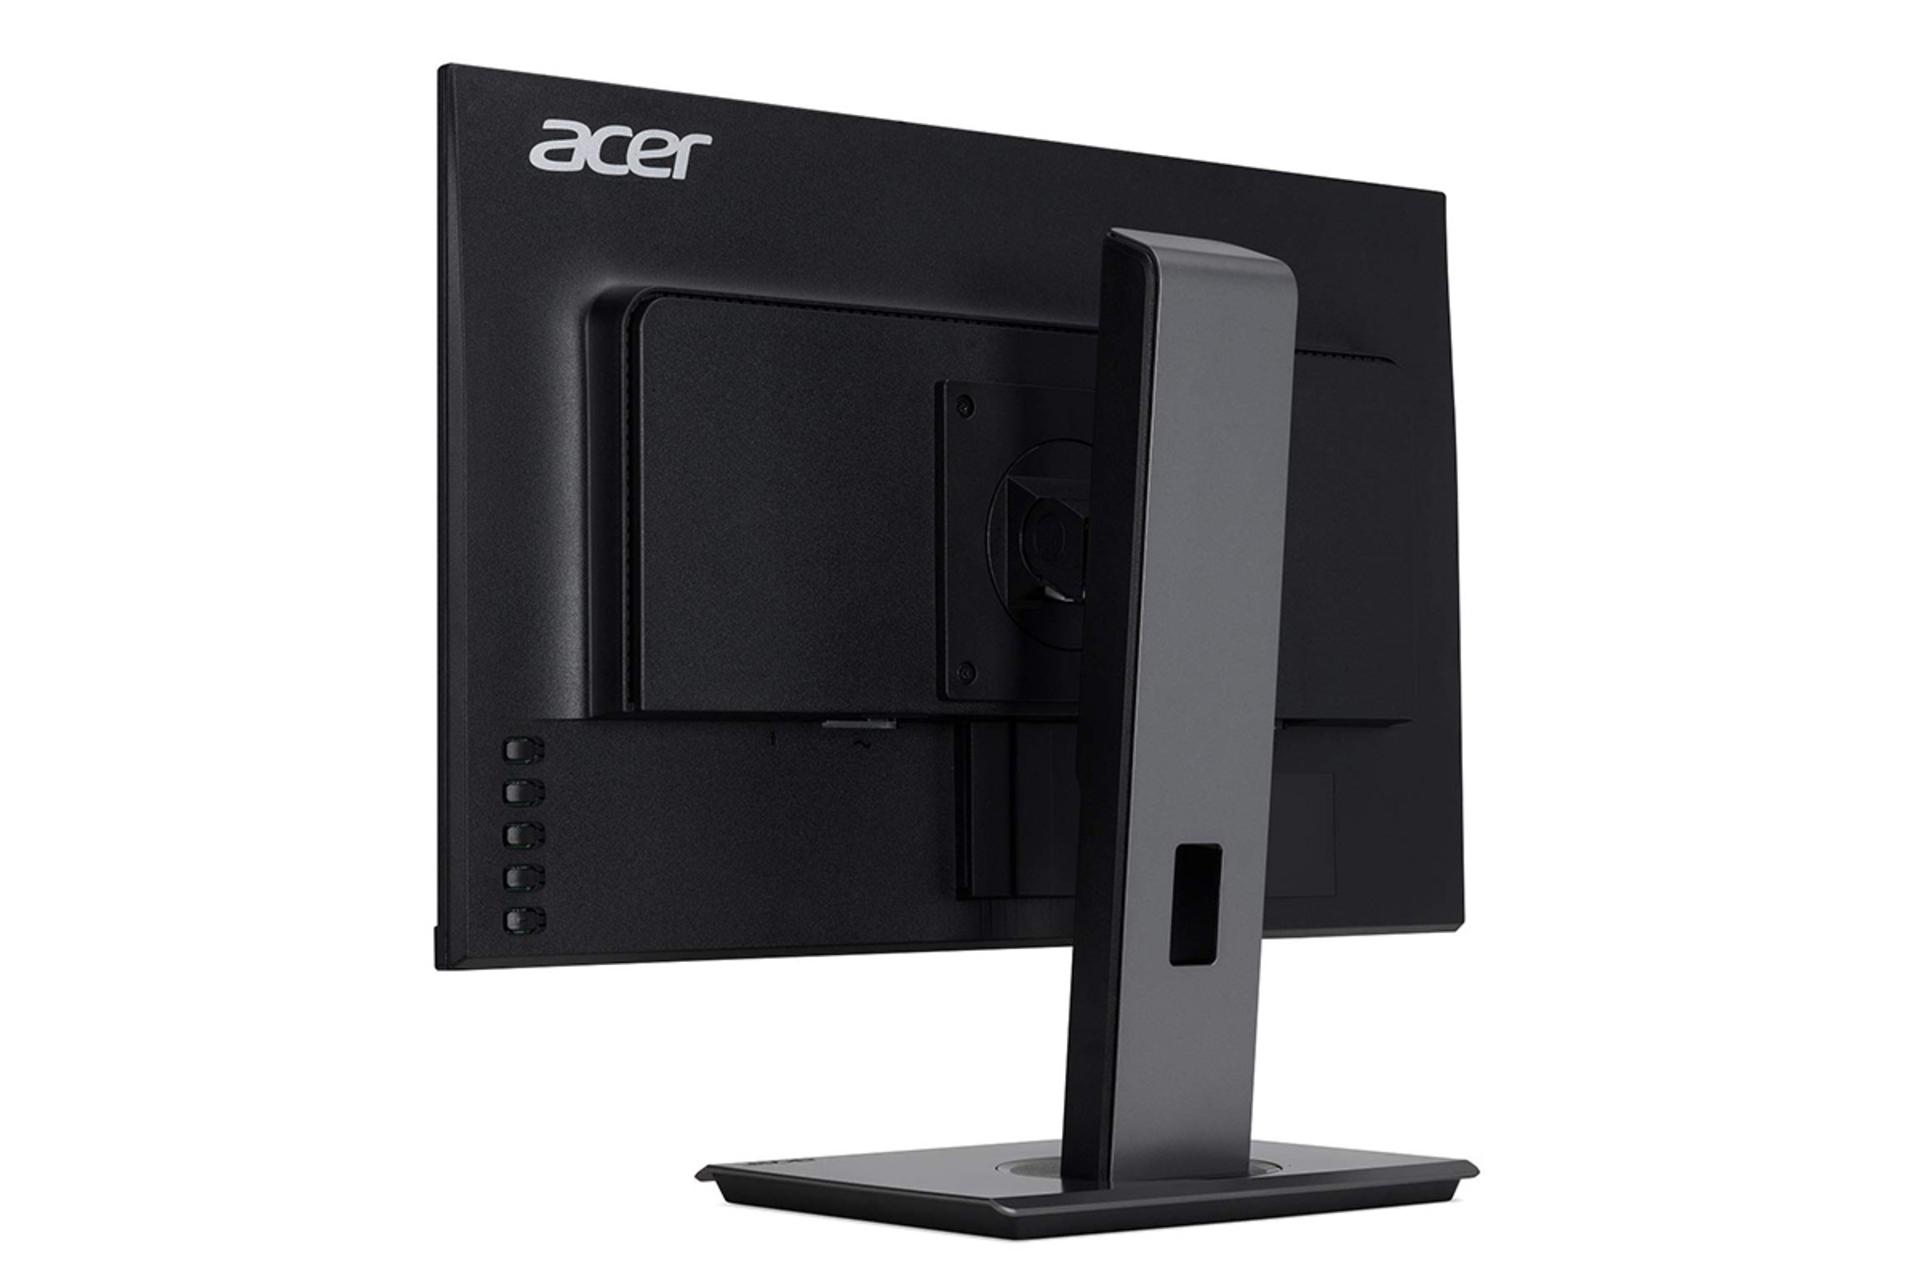 Acer BW257 bmiprx / ایسر